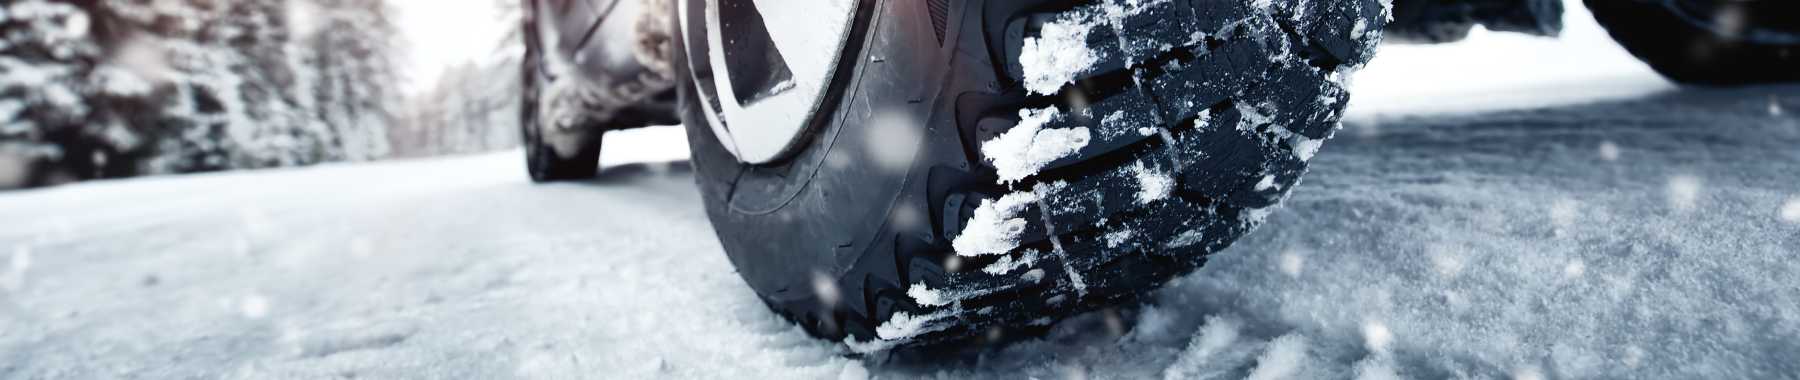 Kumho Wintercraft Tire WP72 - Priority Review